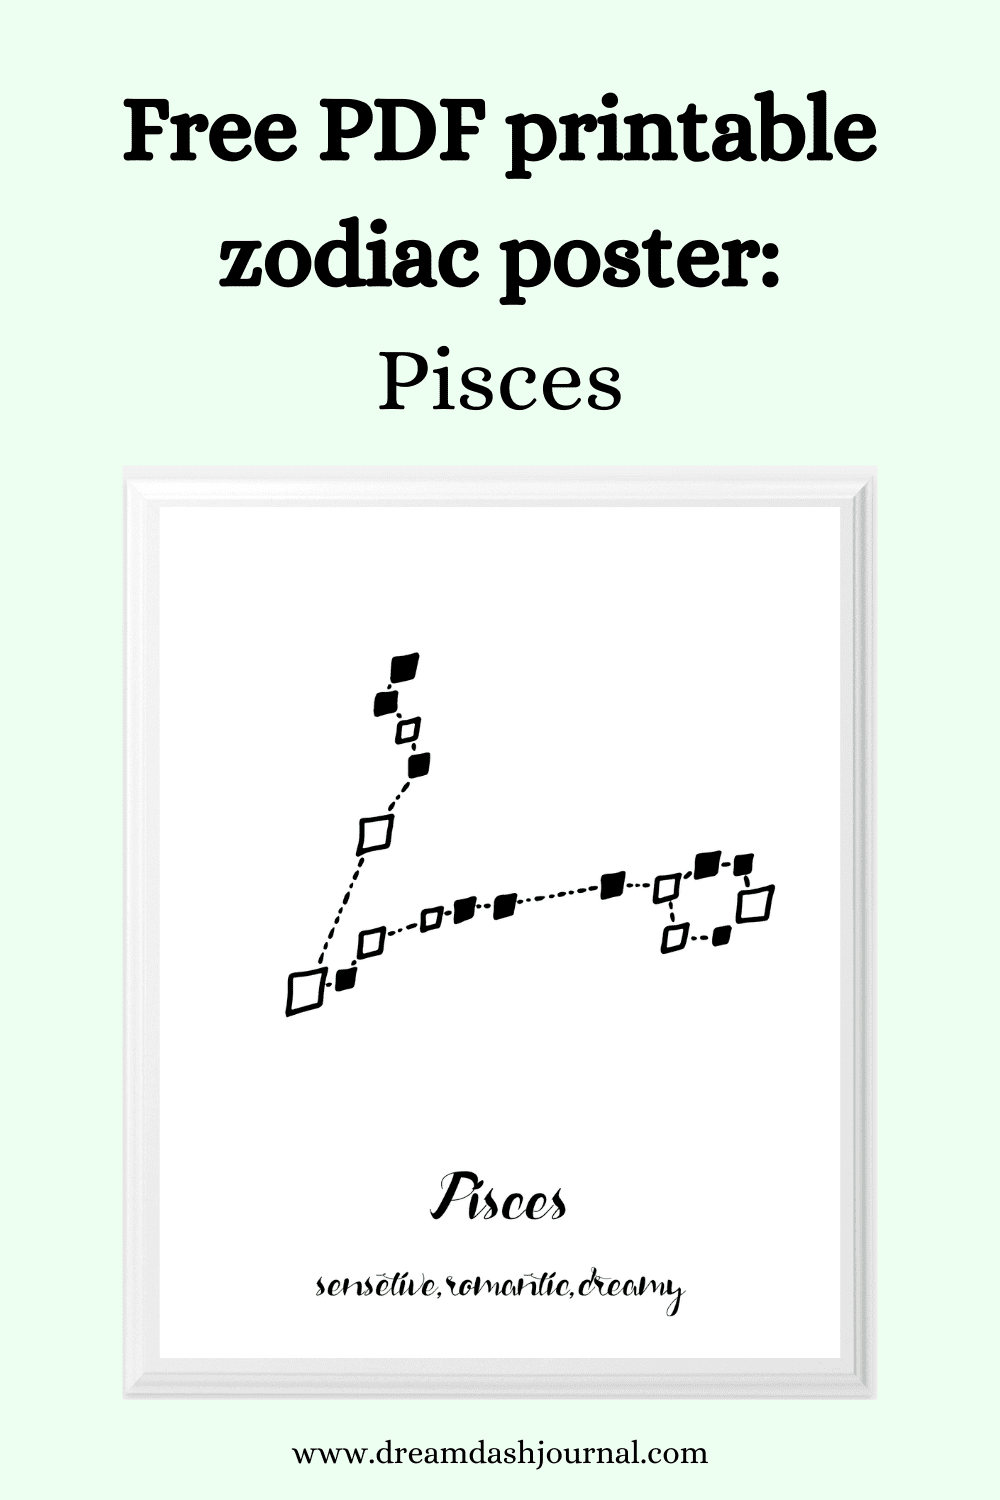 zodiac printables, free zodiac poster print. Sign: Pisces